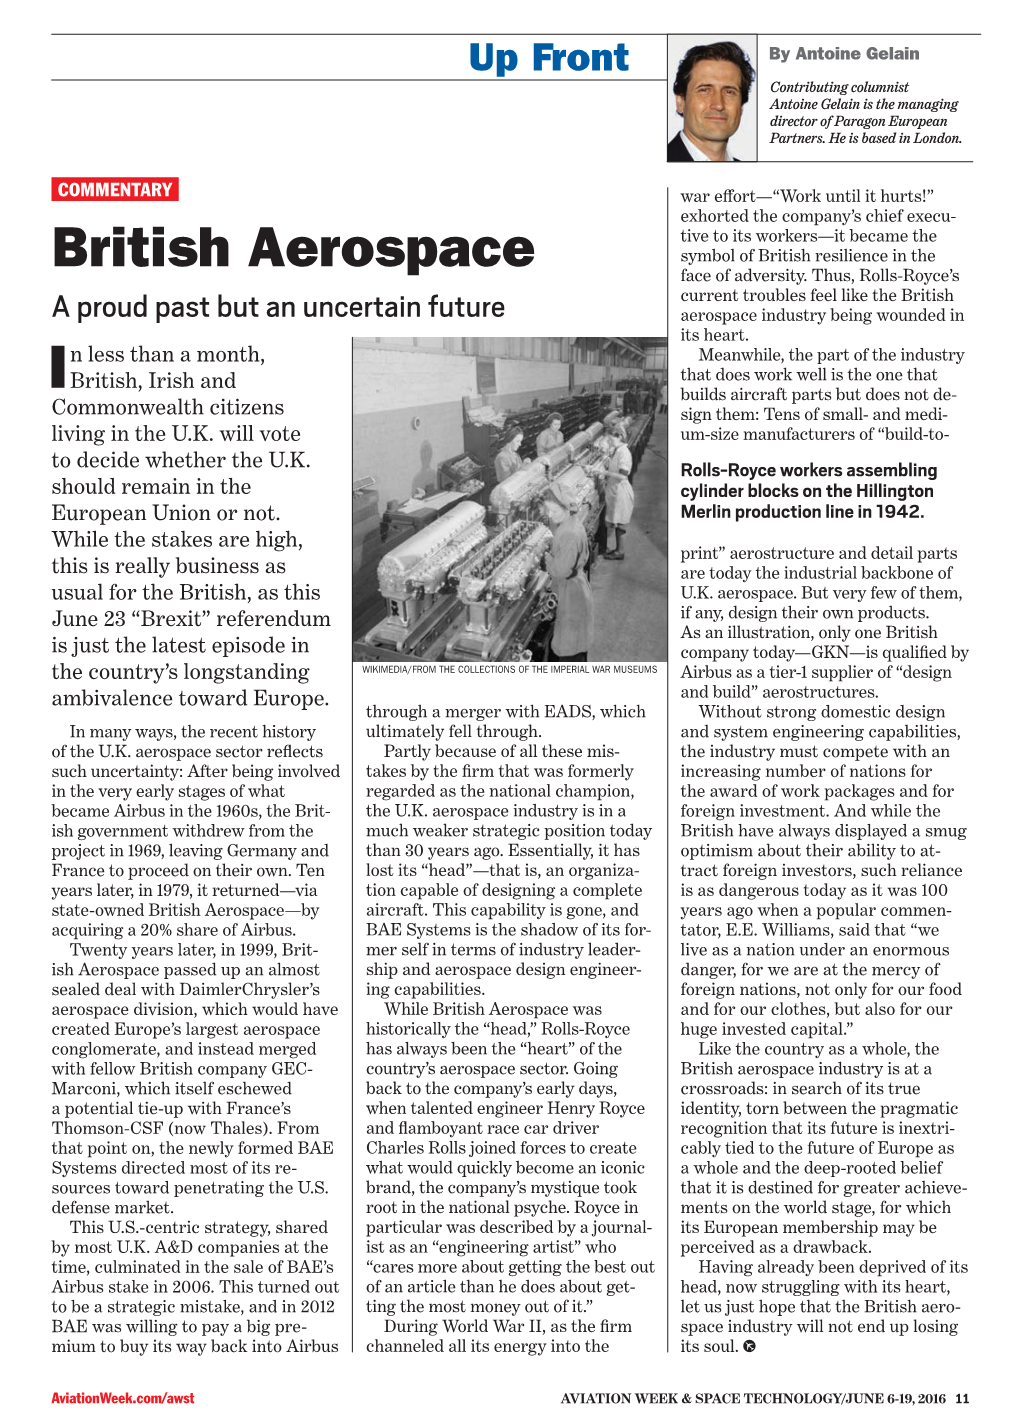 British Aerospace Face of Adversity